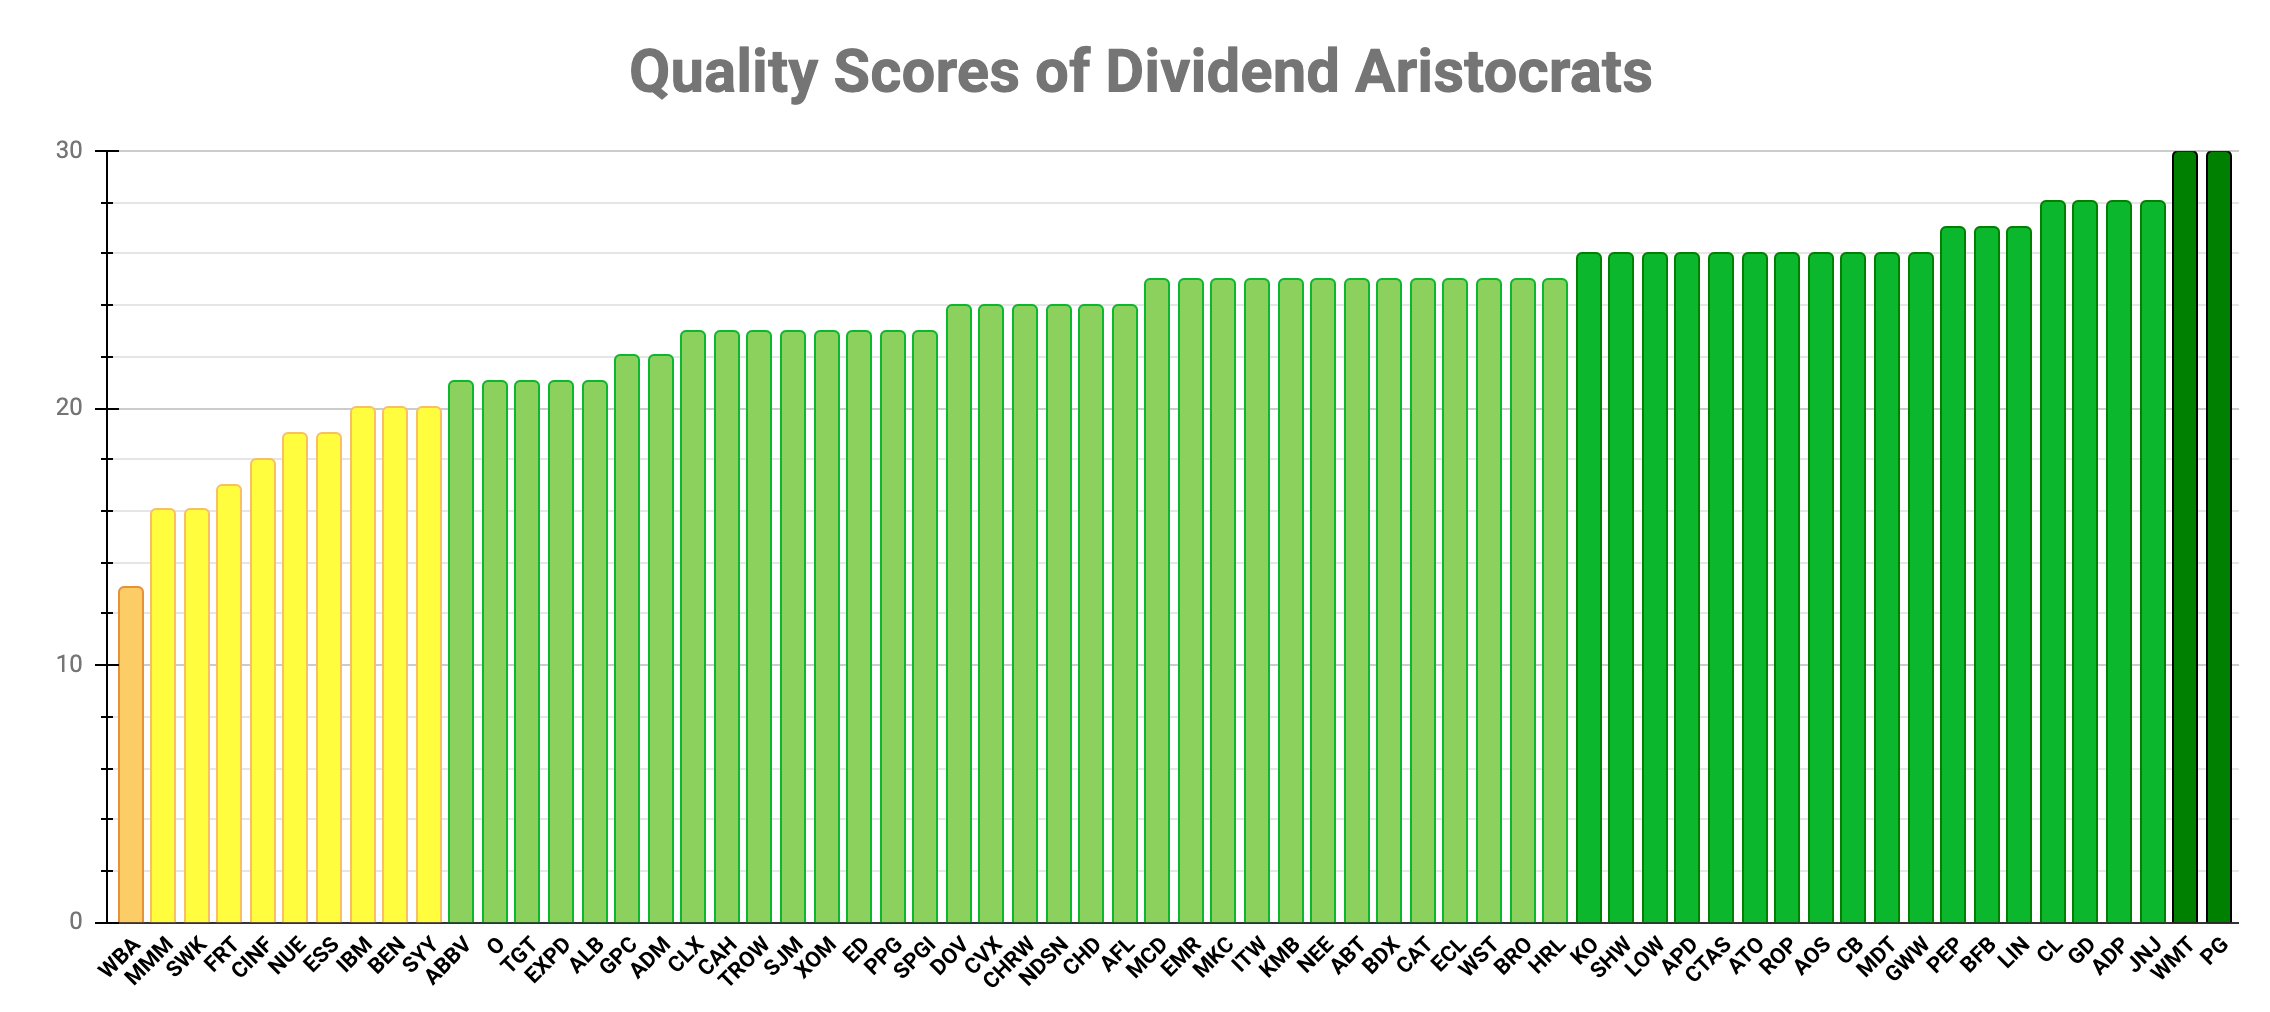 Undervalued Dividend Aristocrats